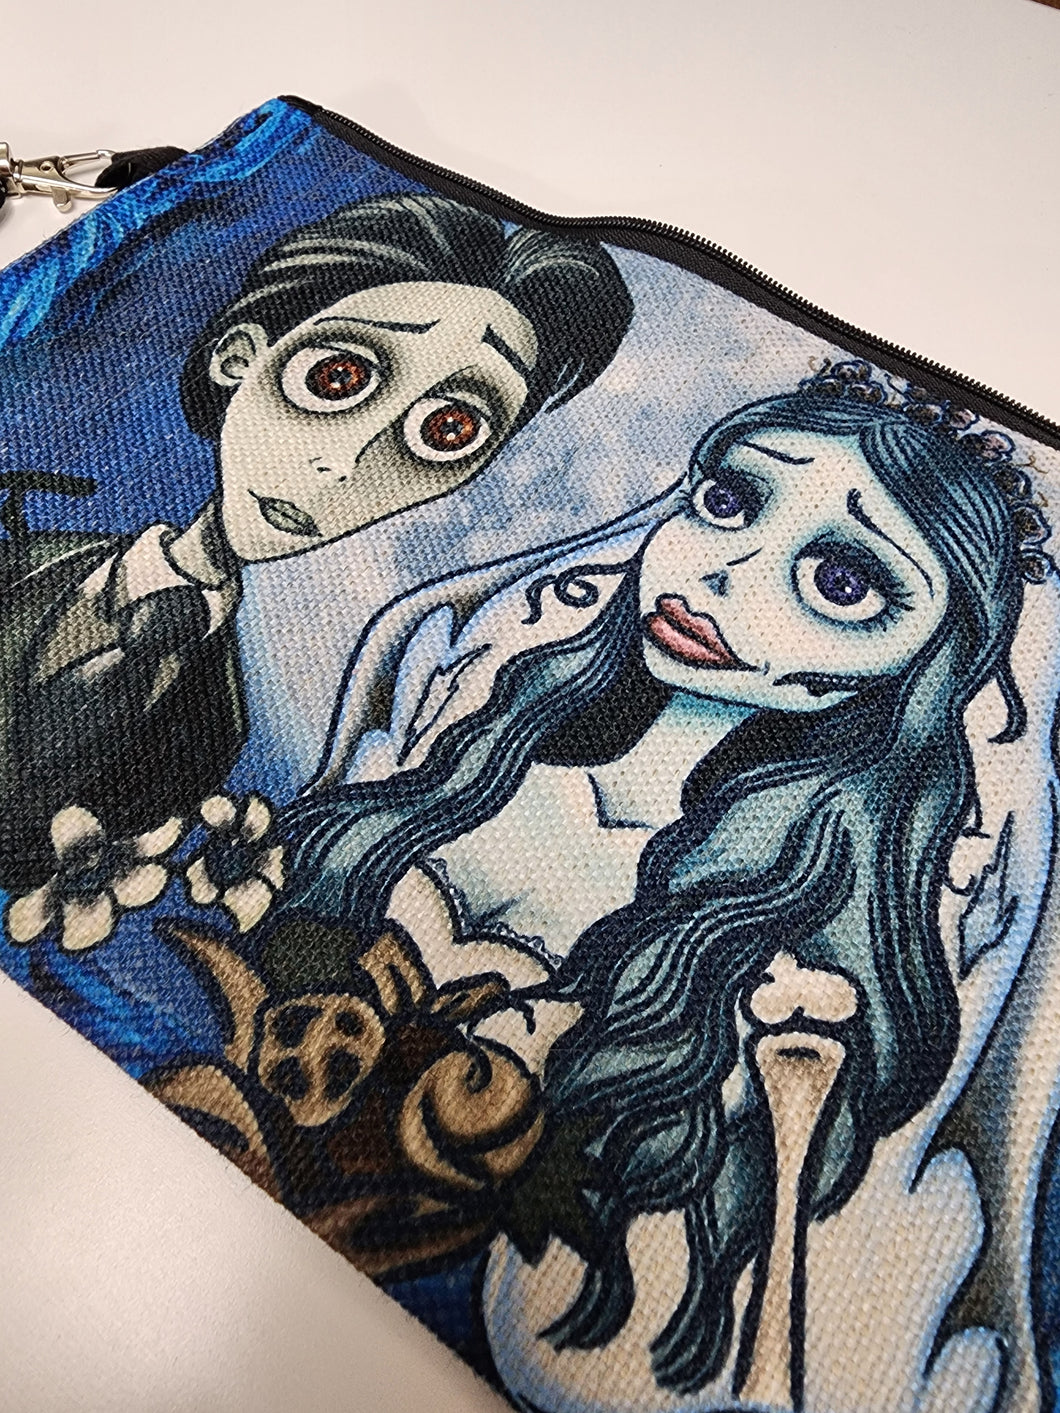 Linen Canvas Make up bag-The dead bride - 9.25